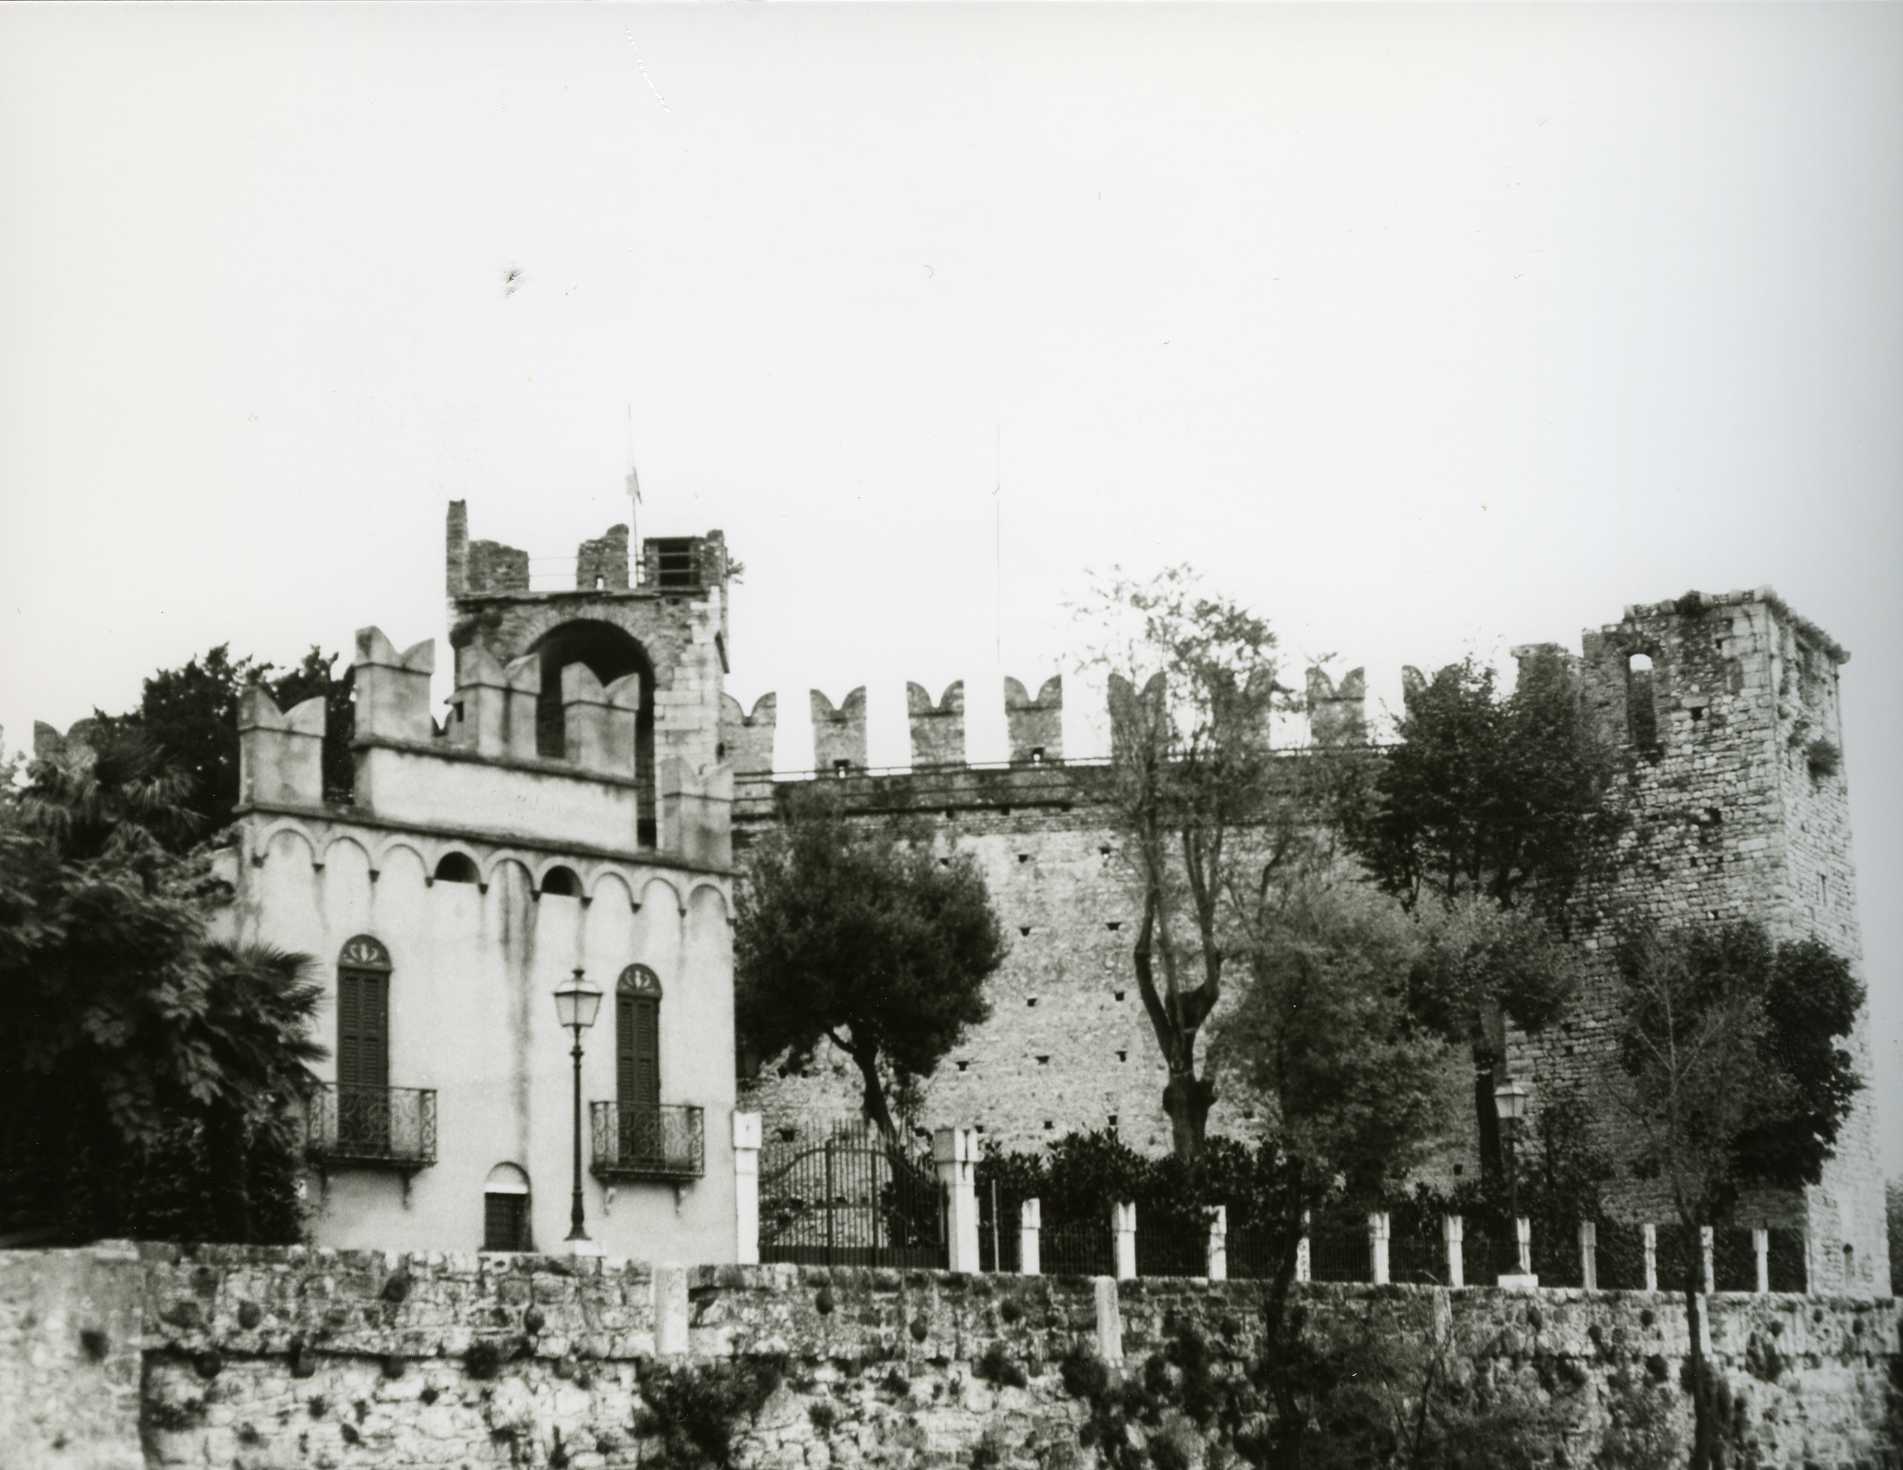 castello scaligero (castello) - Torri del Benaco (VR)  (XIV)